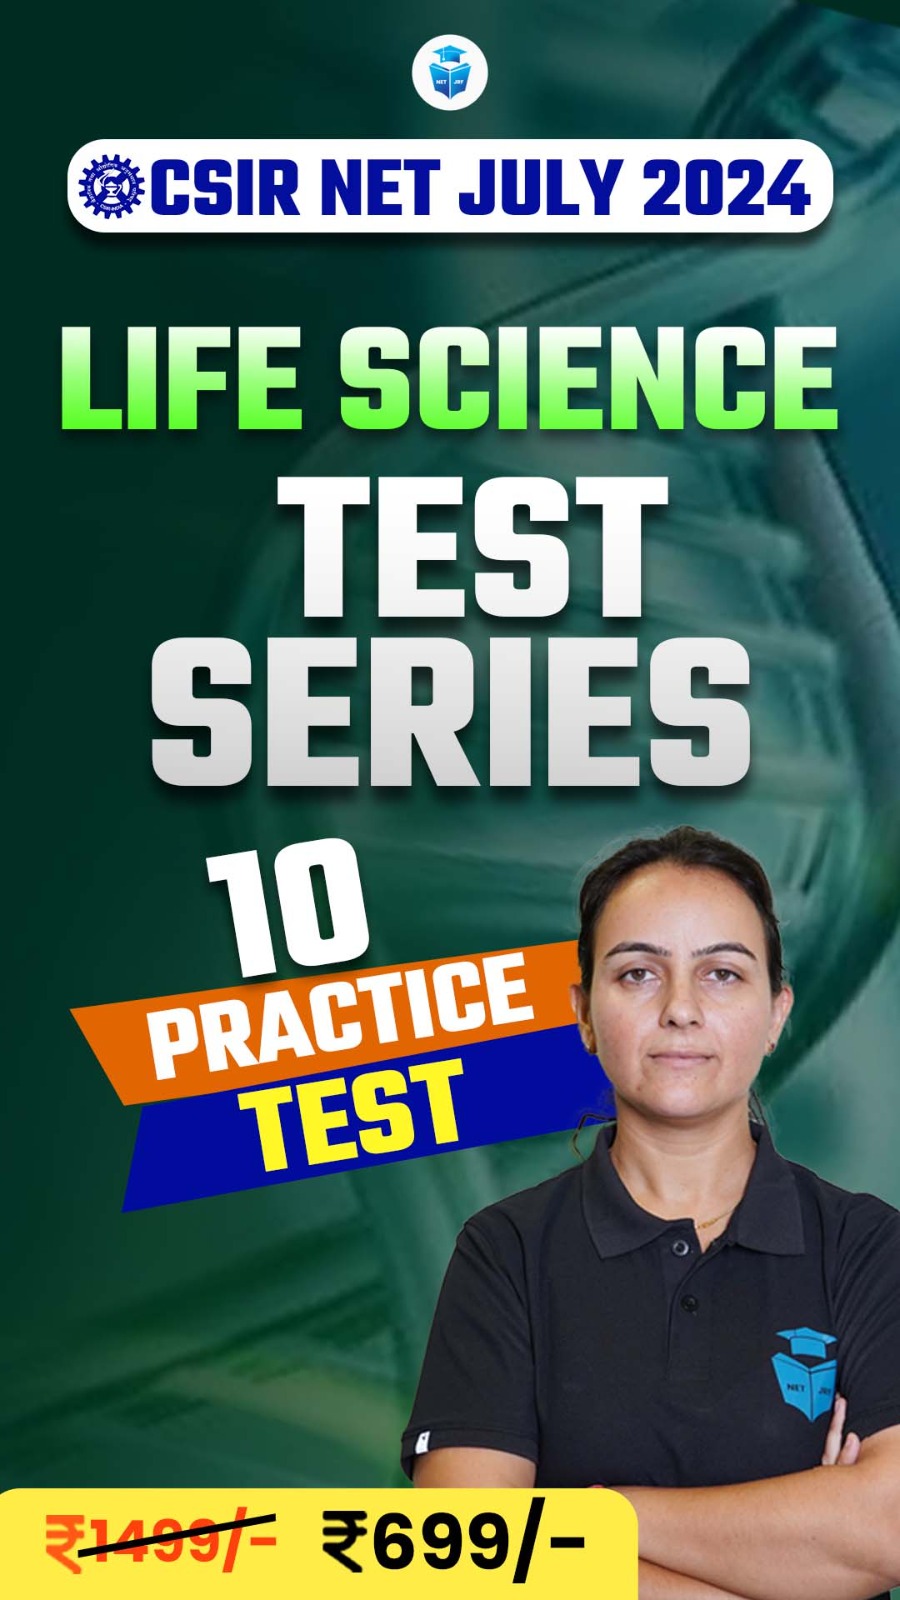 CSIR NET Life Science Paper 2 Mock Test